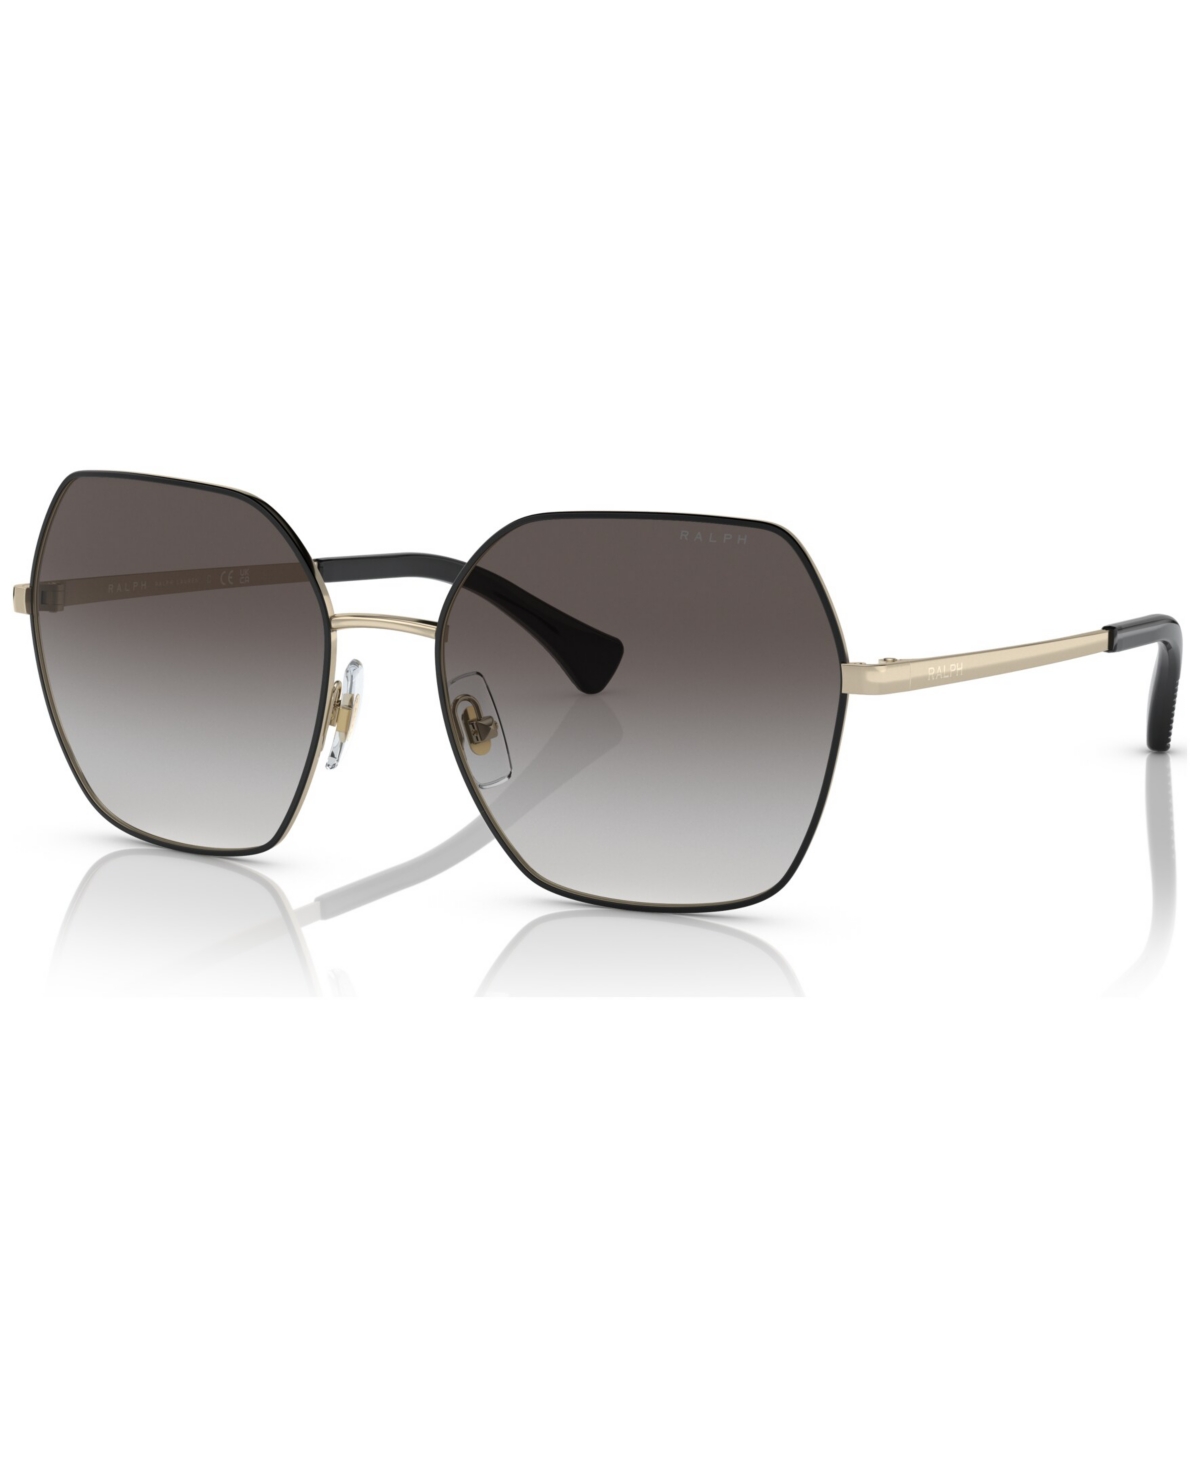 Women's Sunglasses, RA4138 - Shiny Pale Gold-Tone